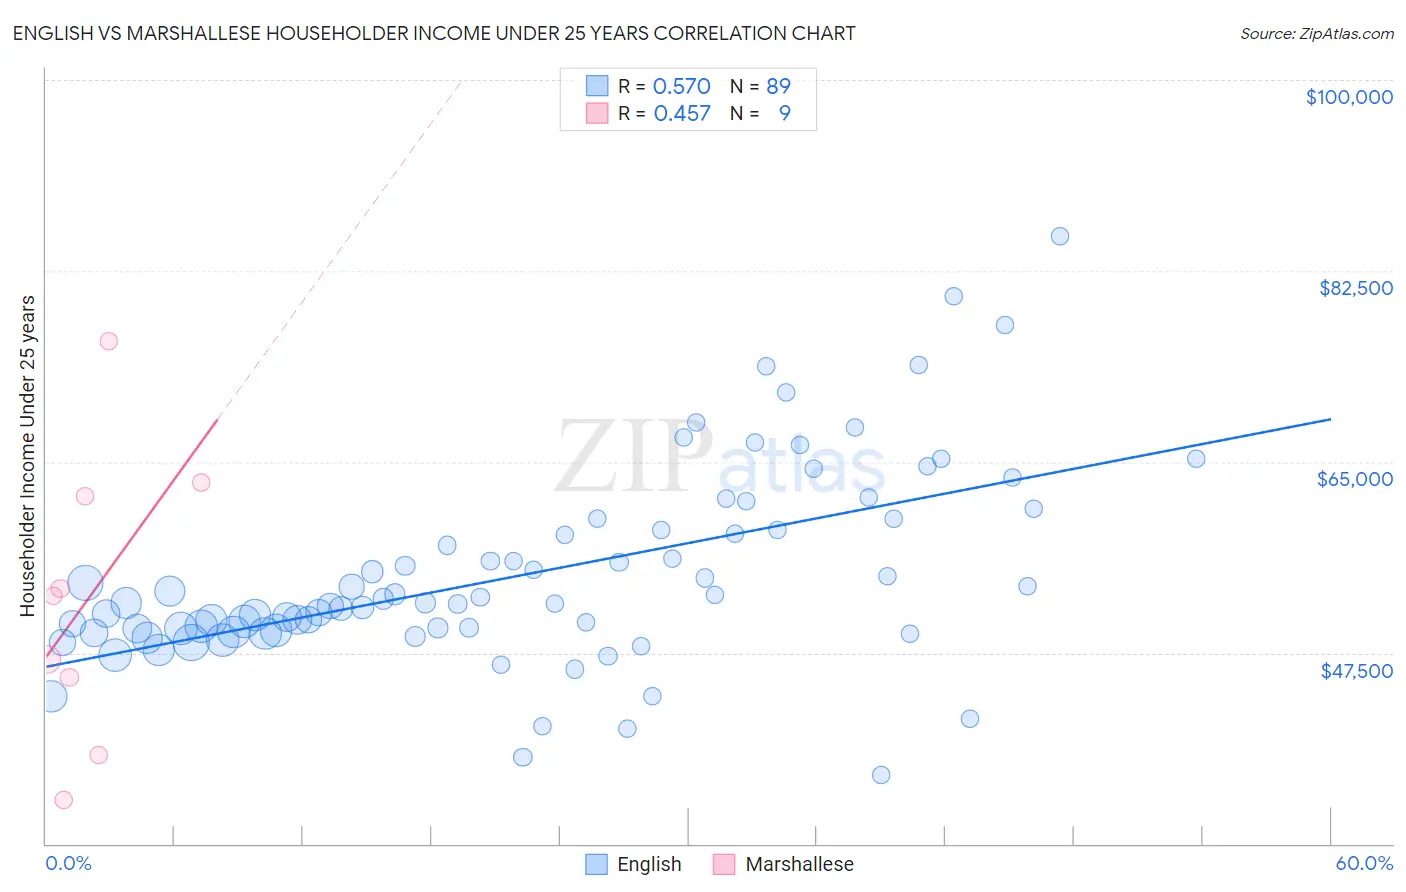 English vs Marshallese Householder Income Under 25 years